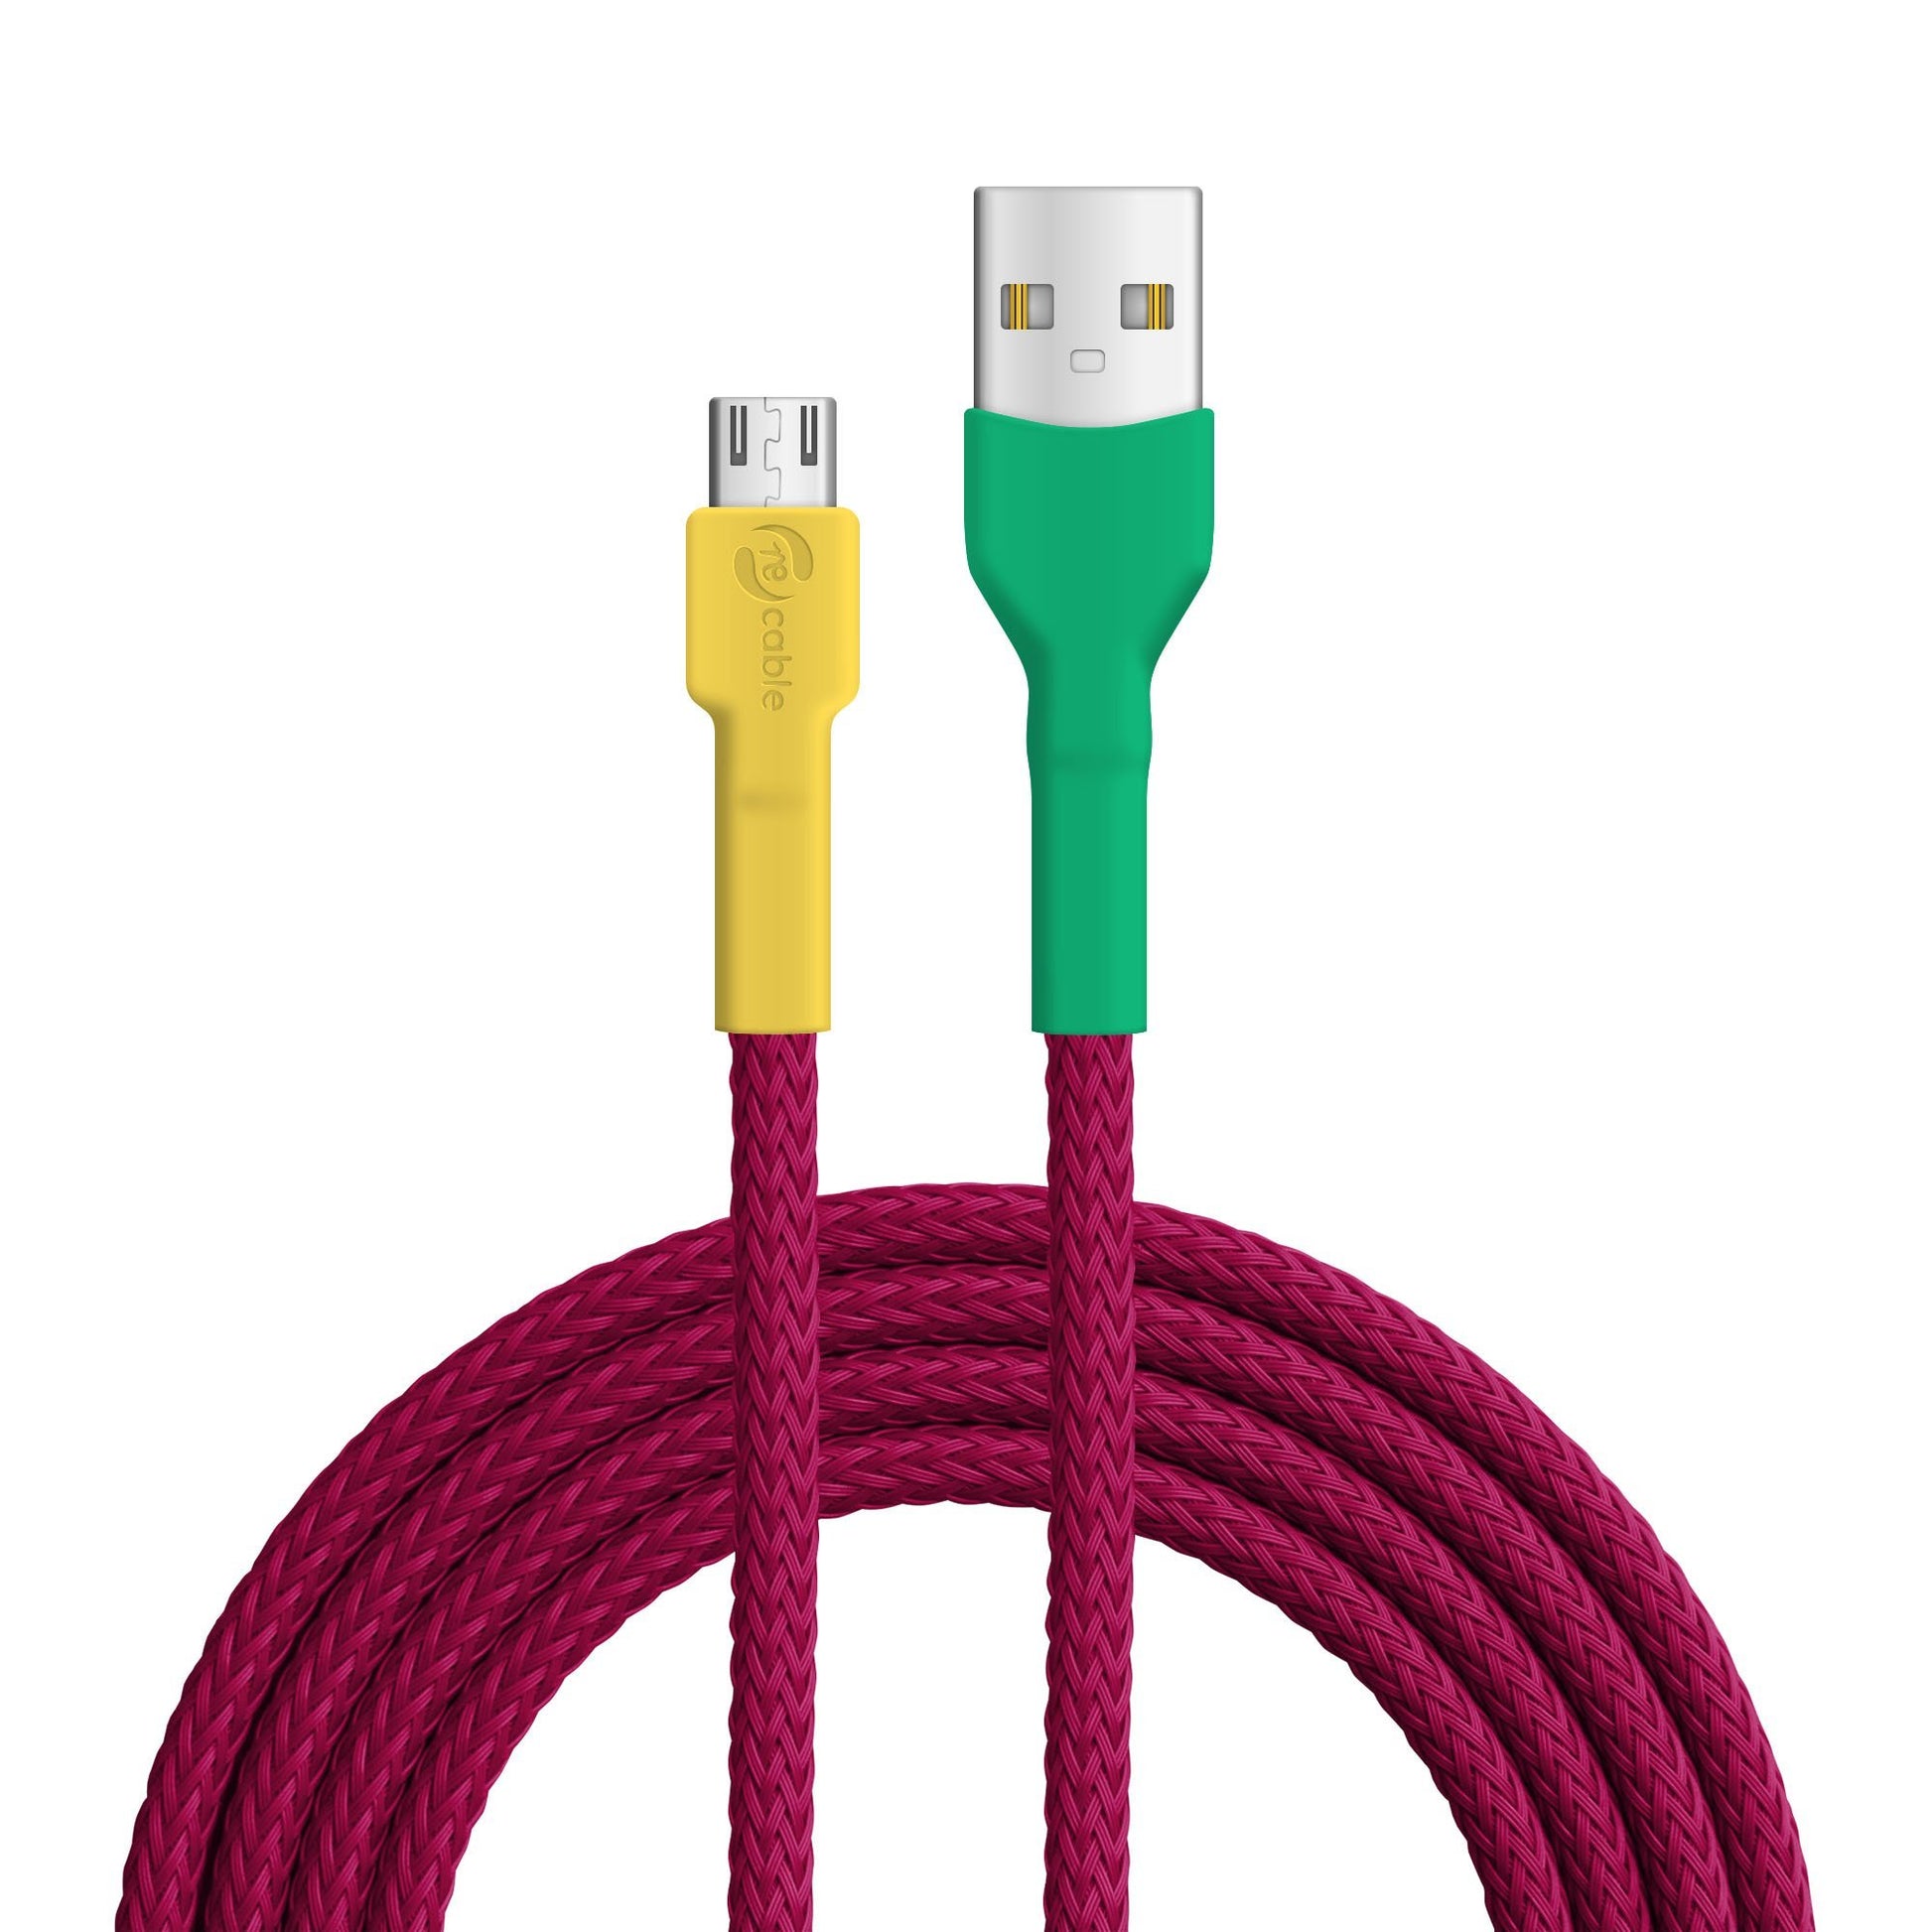 USB-Kabel, Design: Gould­amadine, Anschlüsse: USB A auf Micro-USB